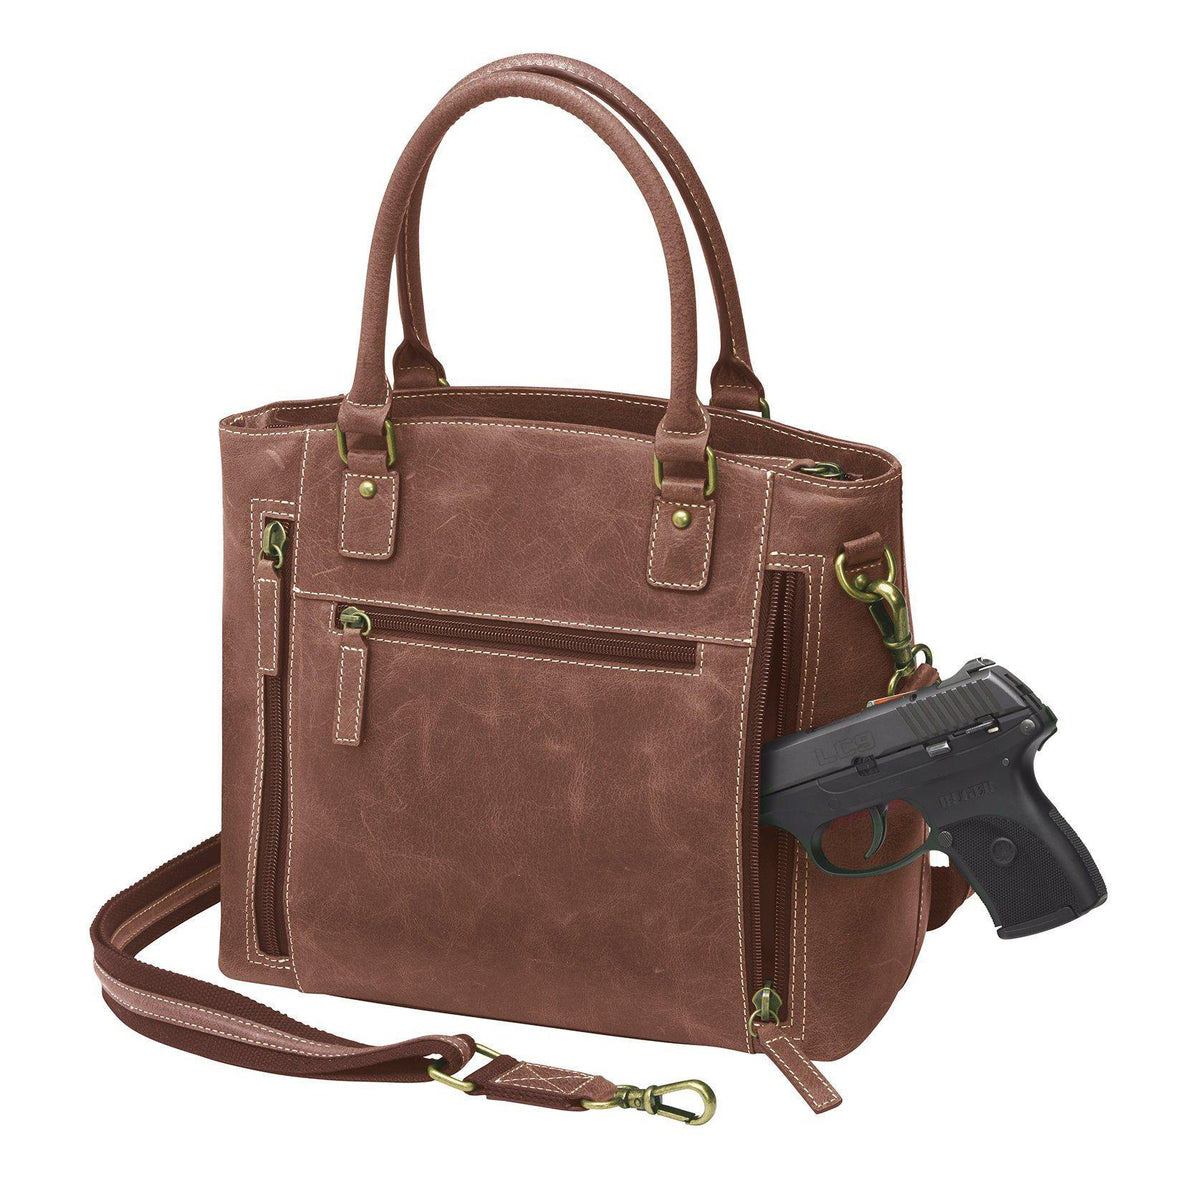 Genuine Leather Concealed Carry Hobo Purse For Ladies Shoulder Bag | eBay